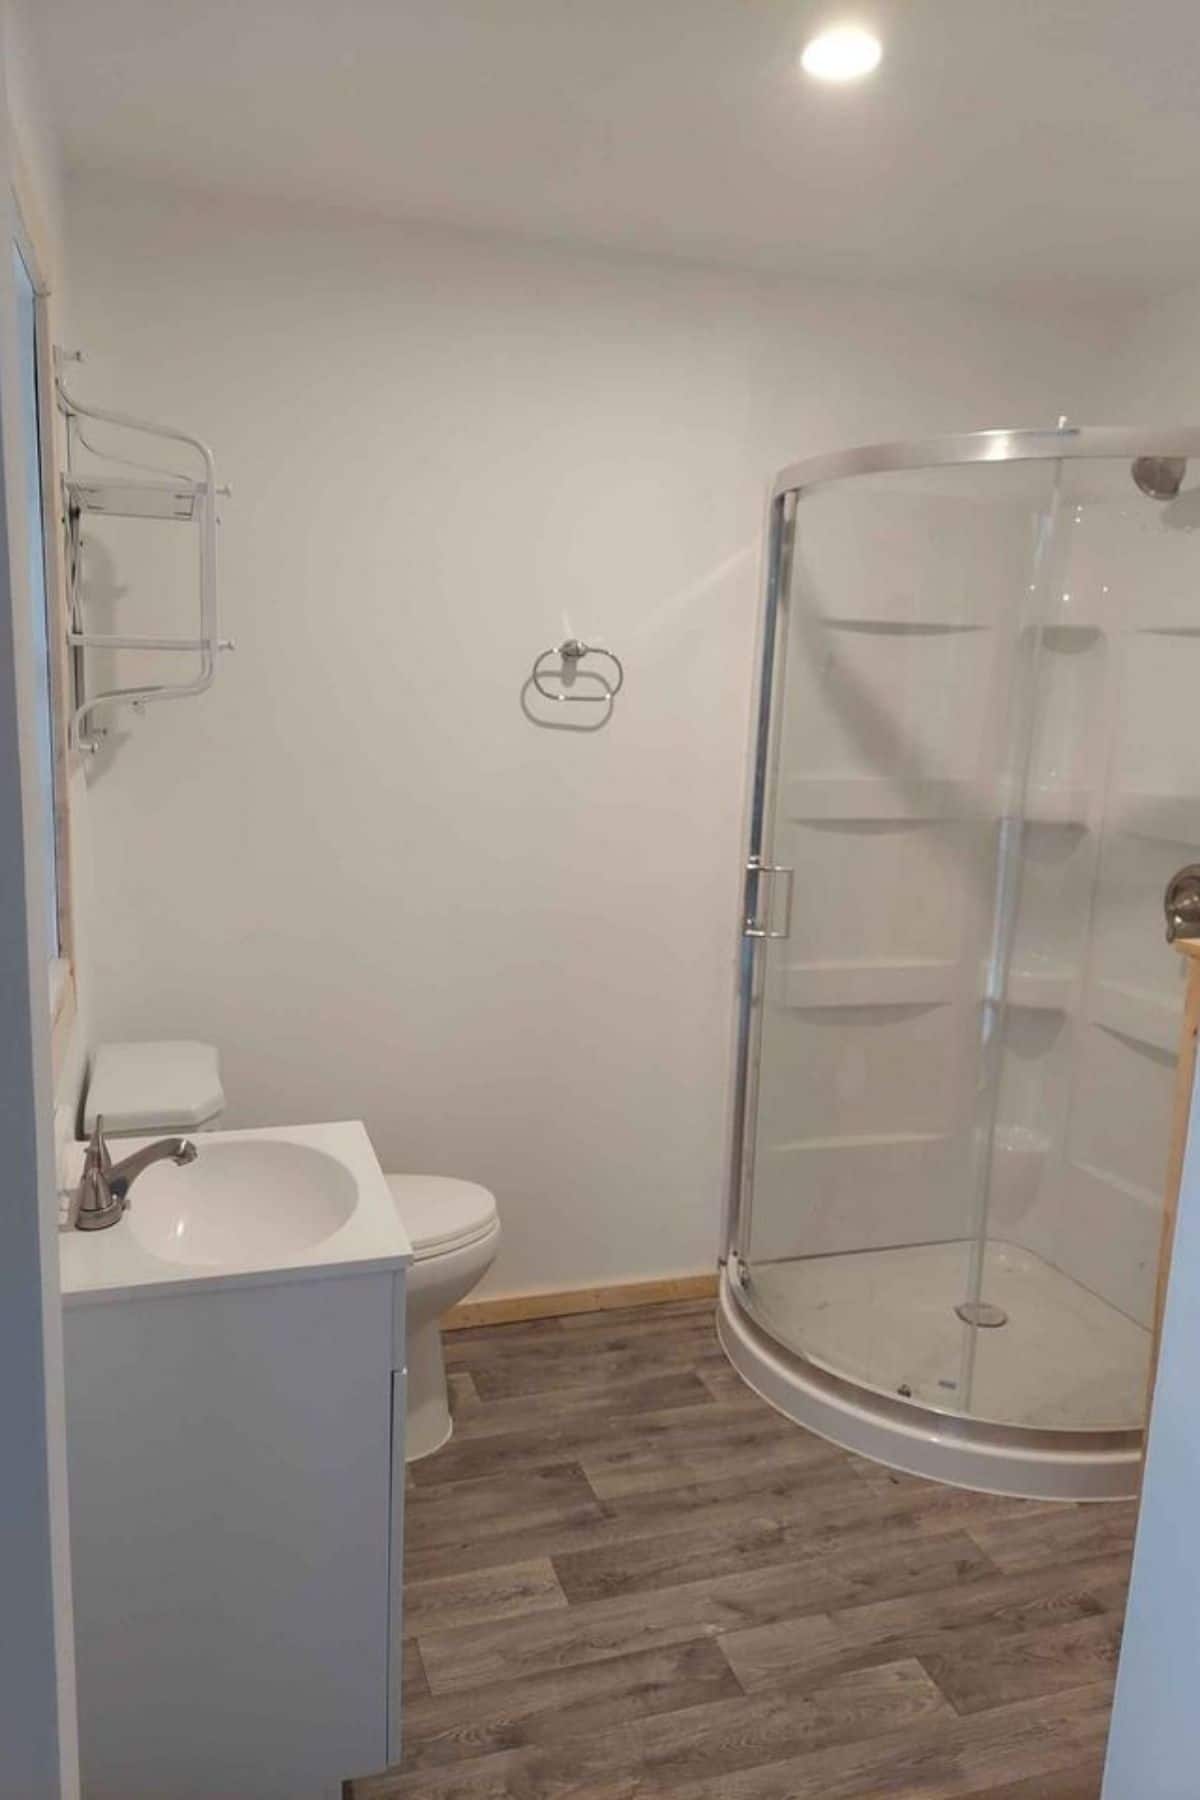 round glass shower stall in corner of white walled bathroom